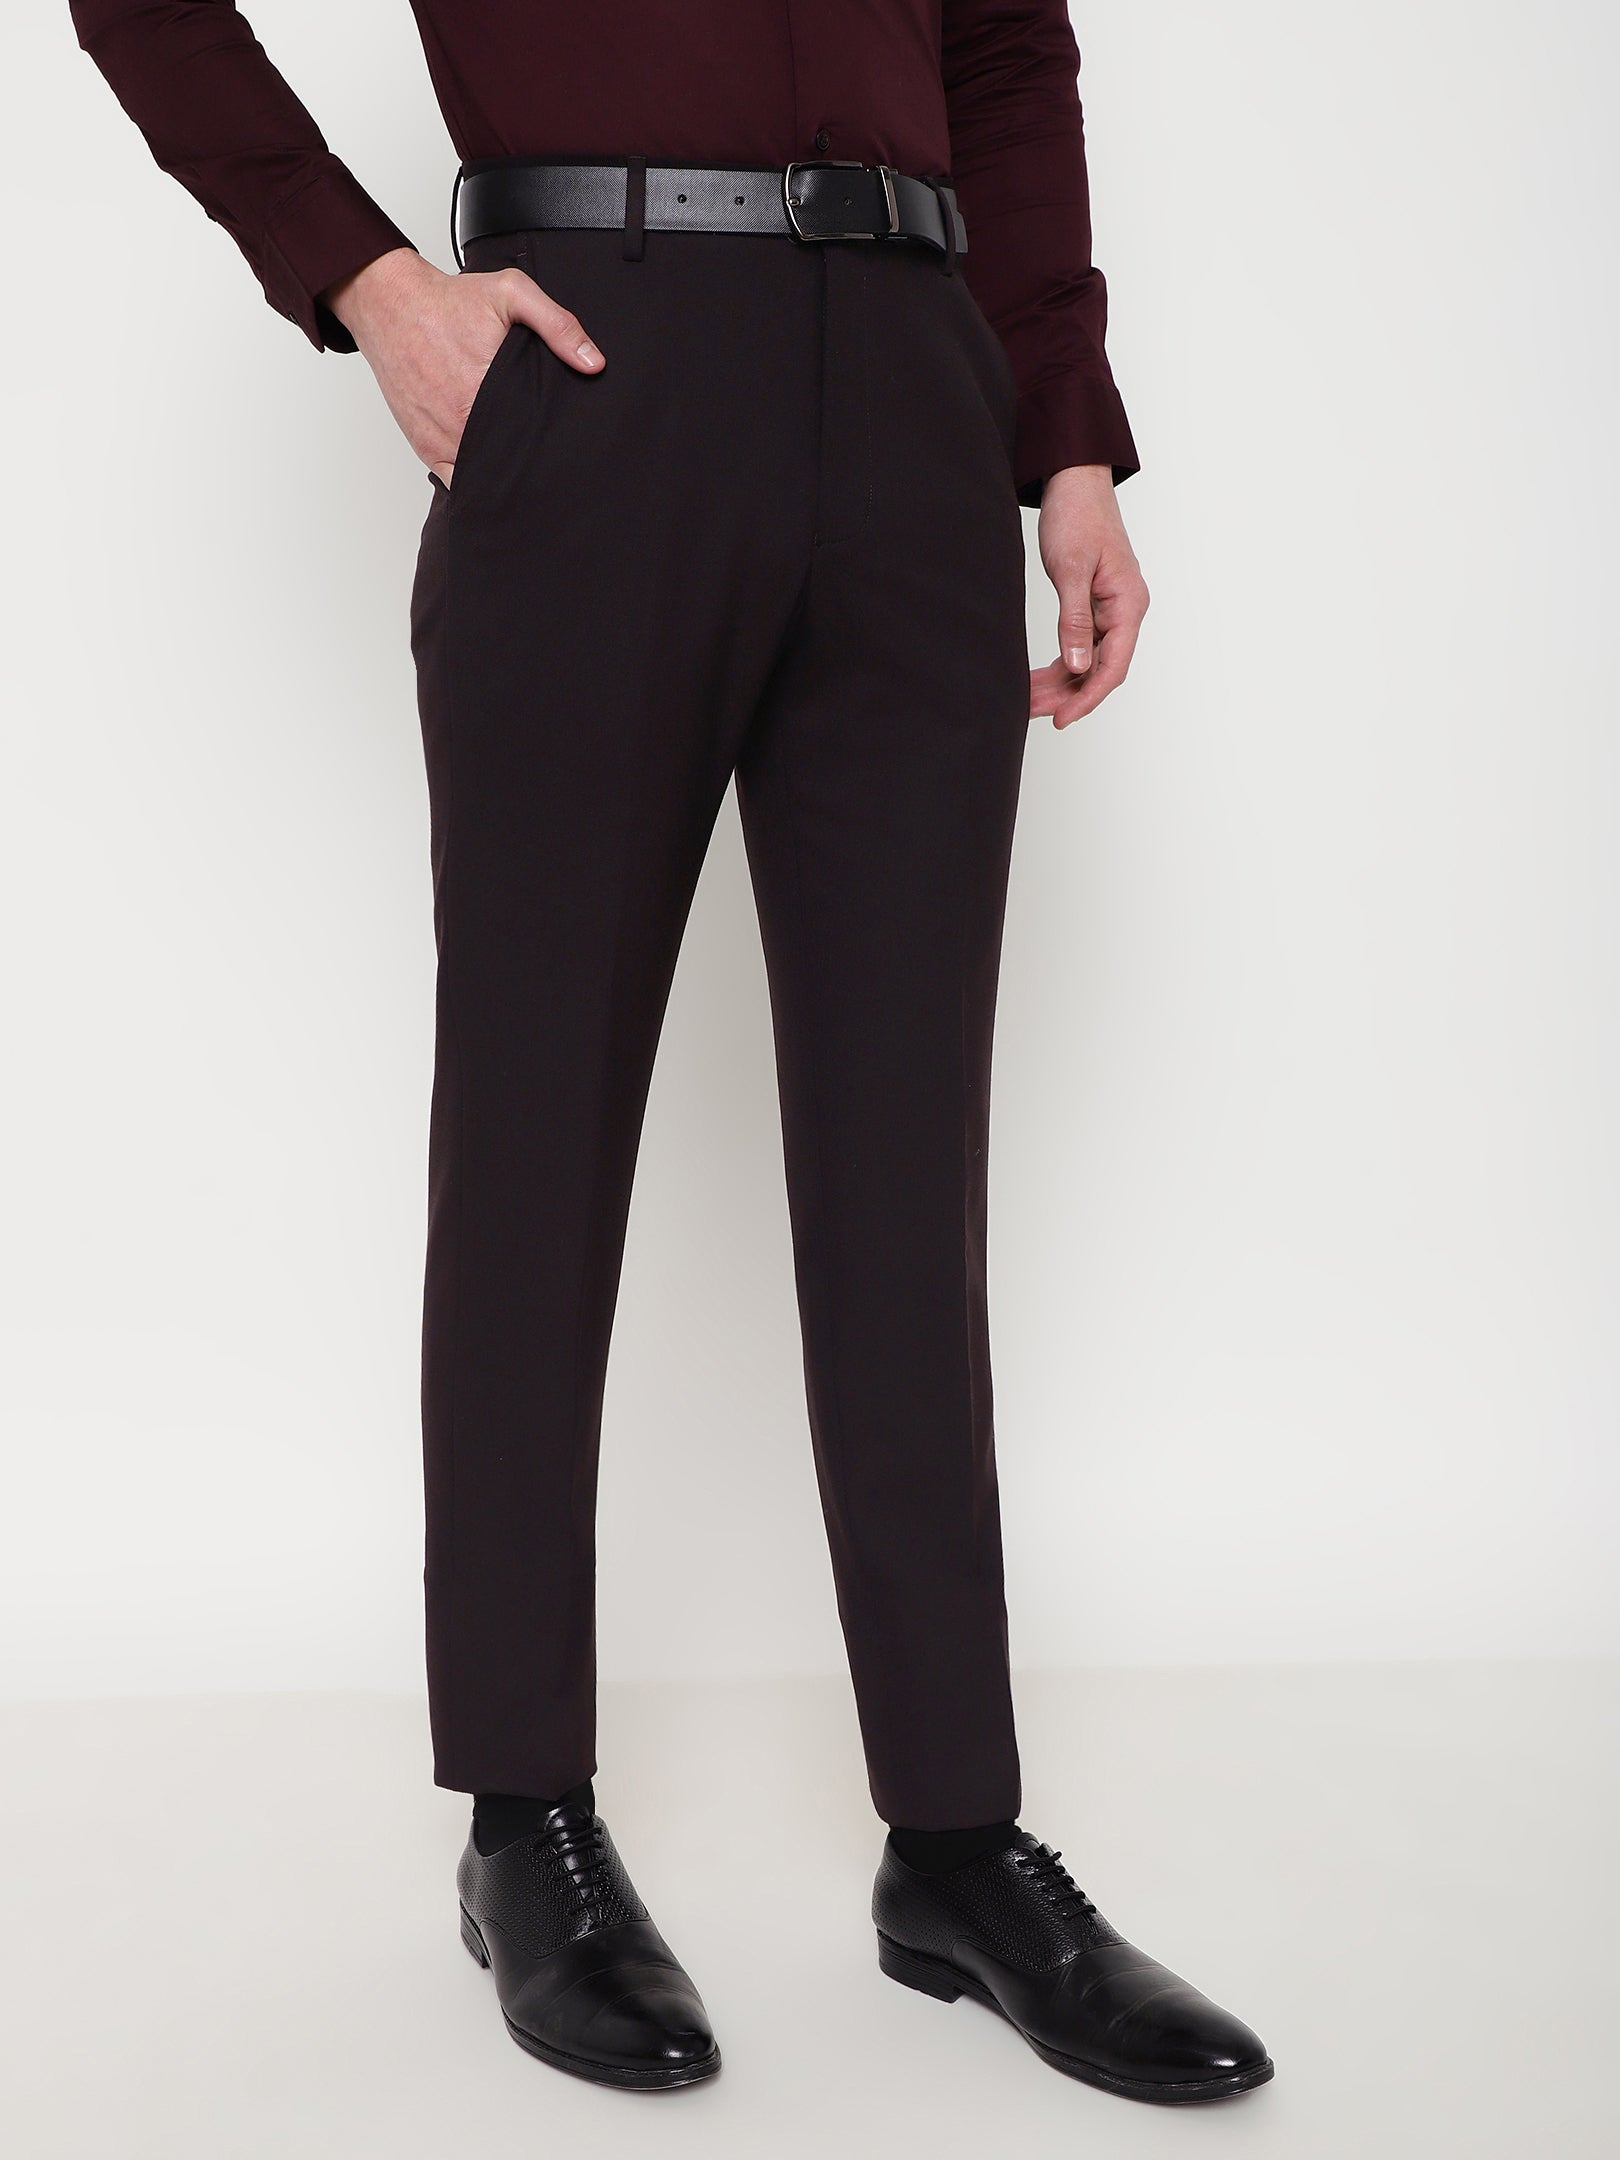 Men Plaid Check Formal Pants Stretch Slim Fit Casual Fashion Work Trouser  36x31 | eBay